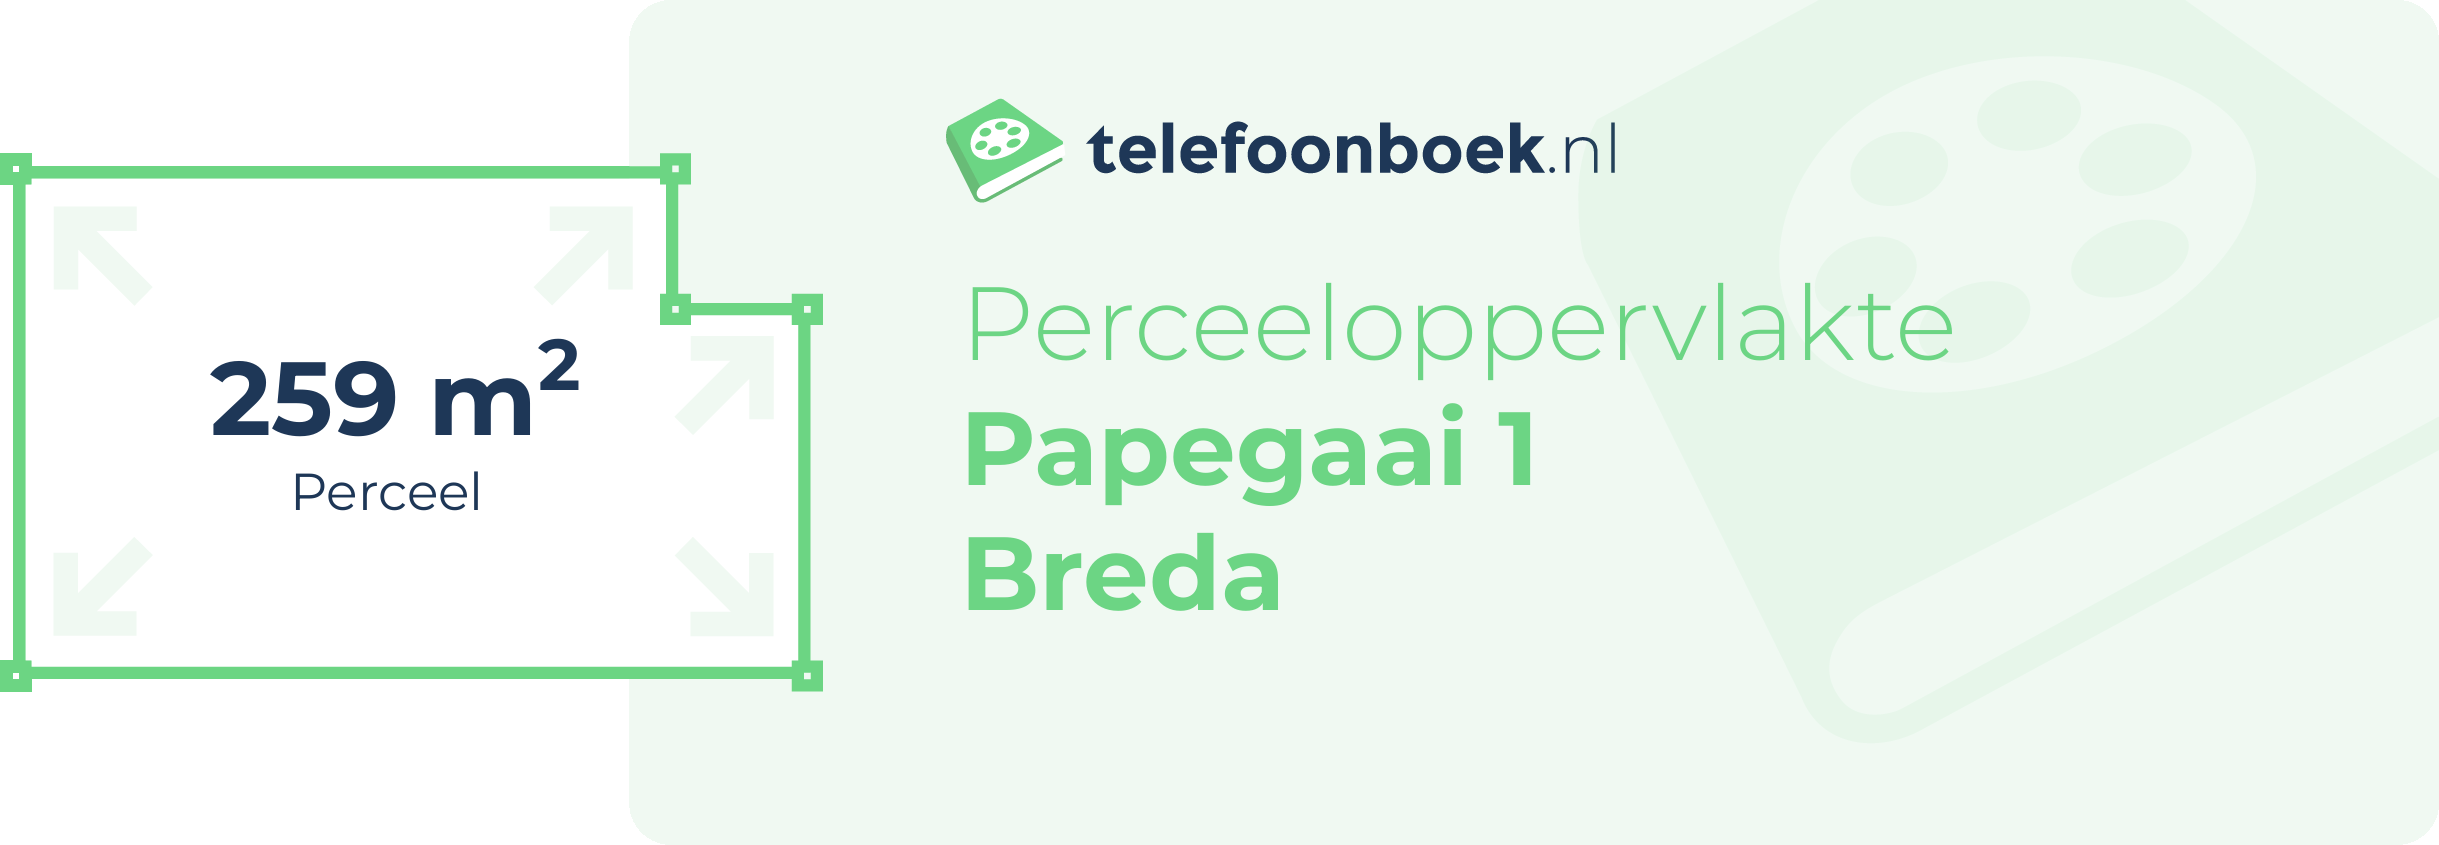 Perceeloppervlakte Papegaai 1 Breda